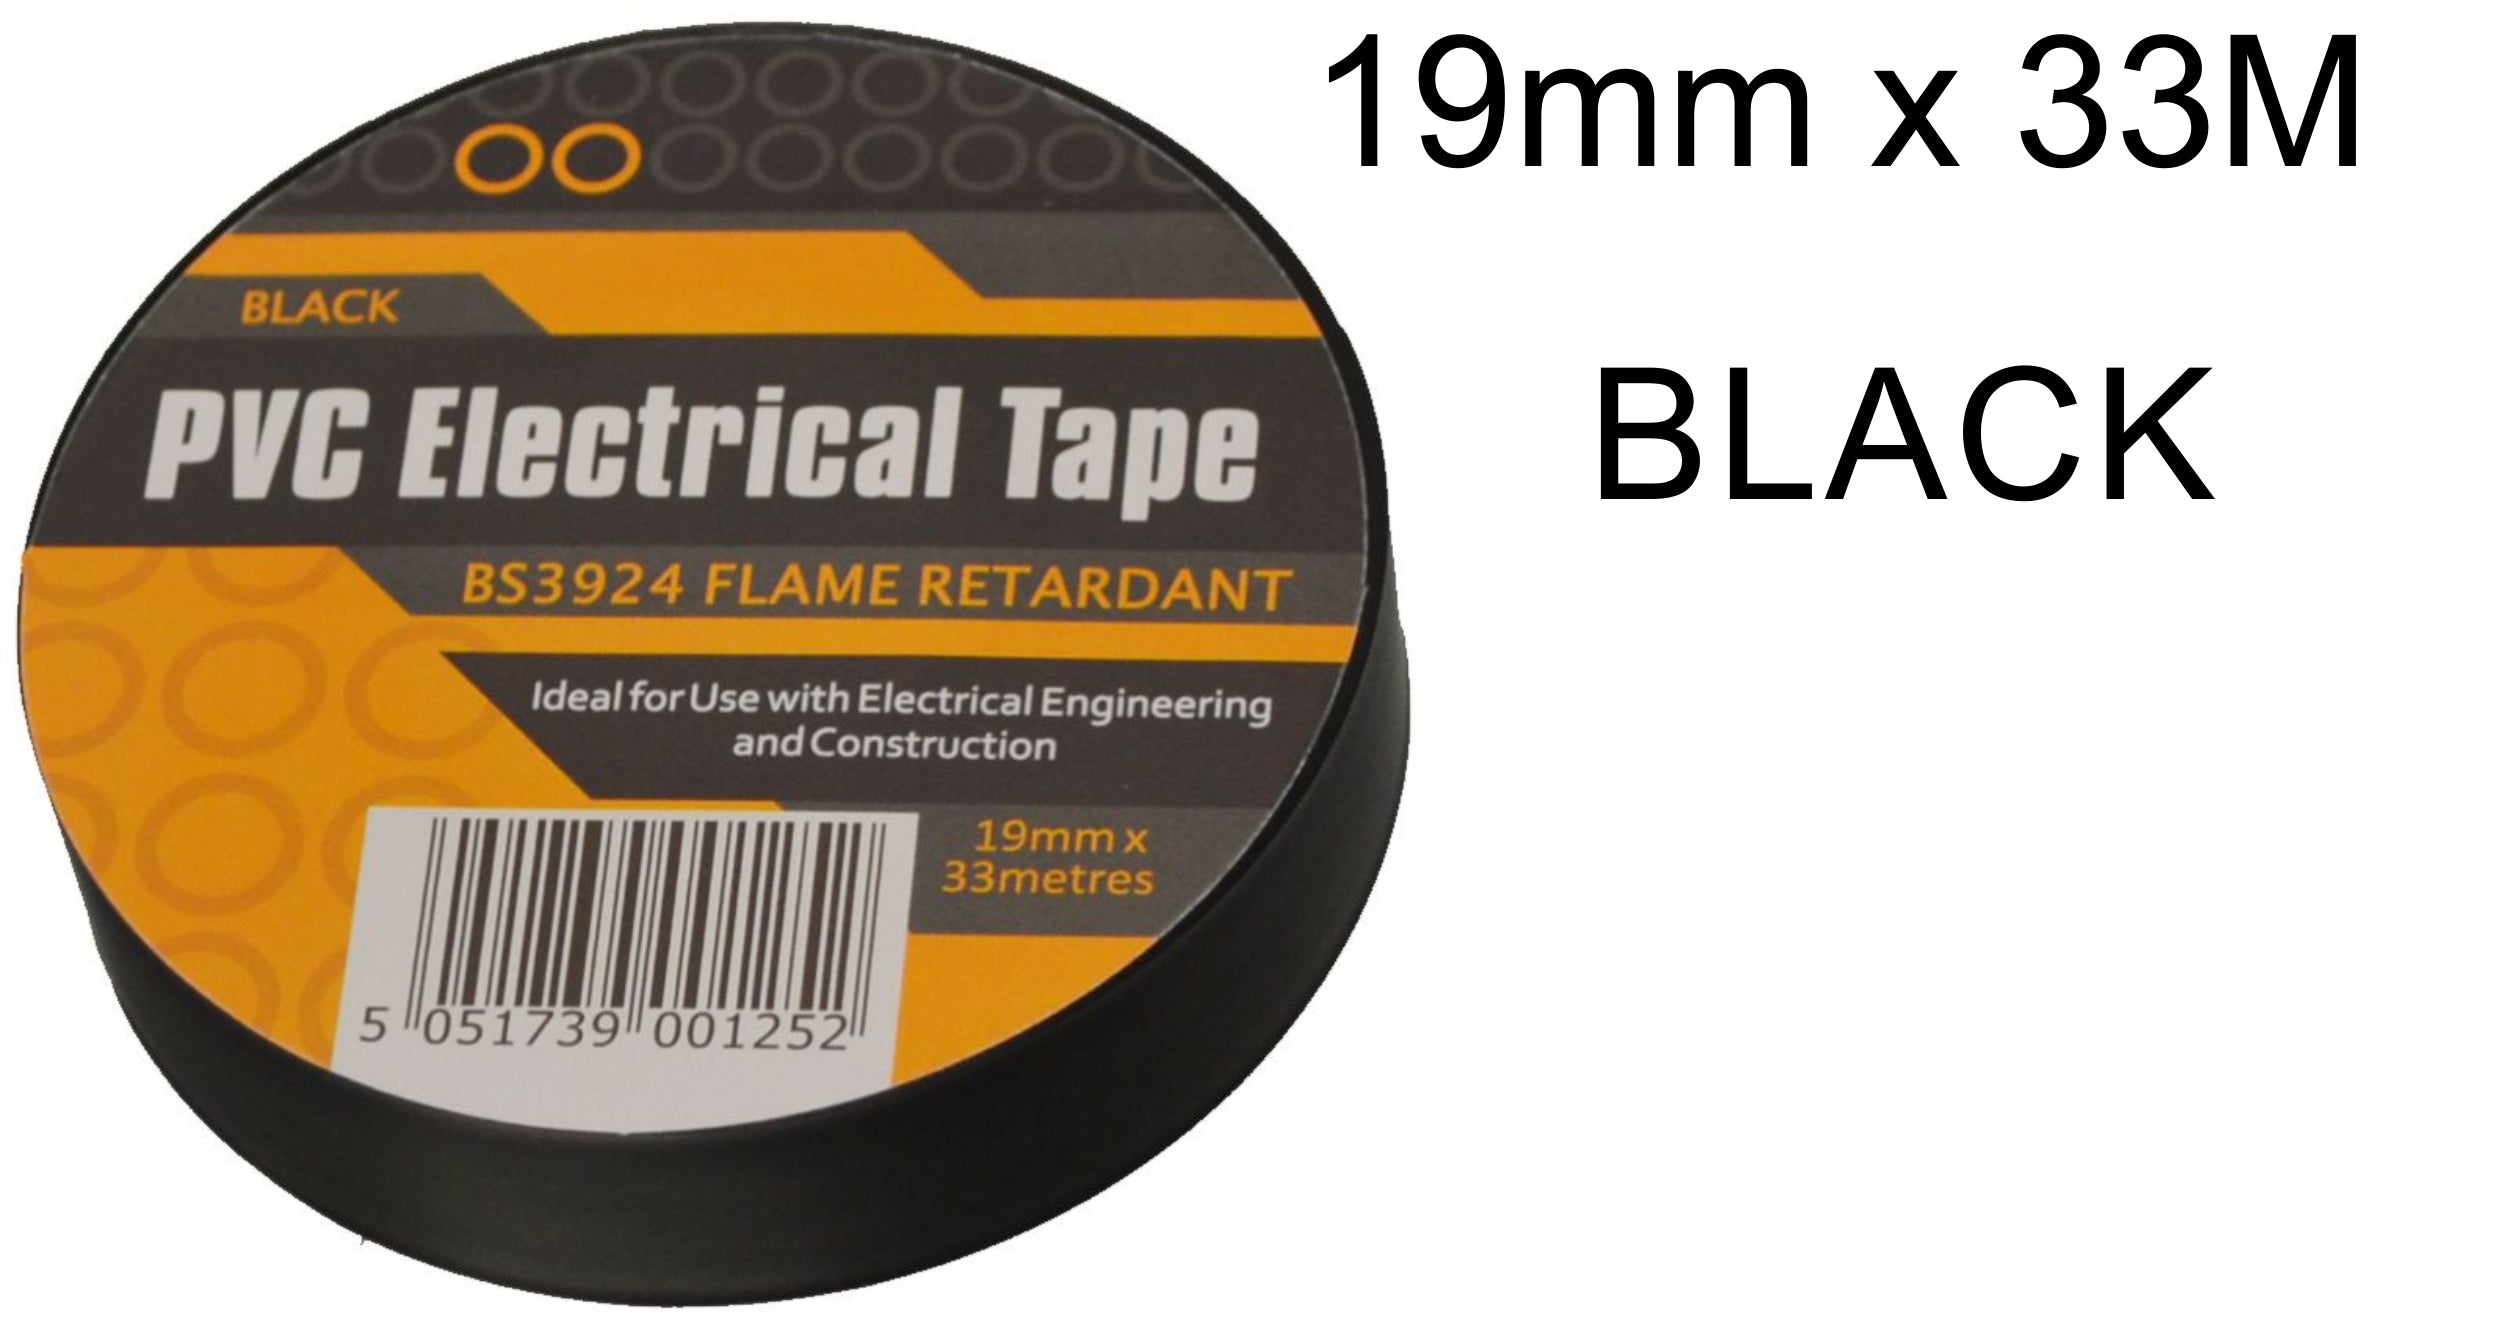 19mm x 33M Black PVC Electrical Tape